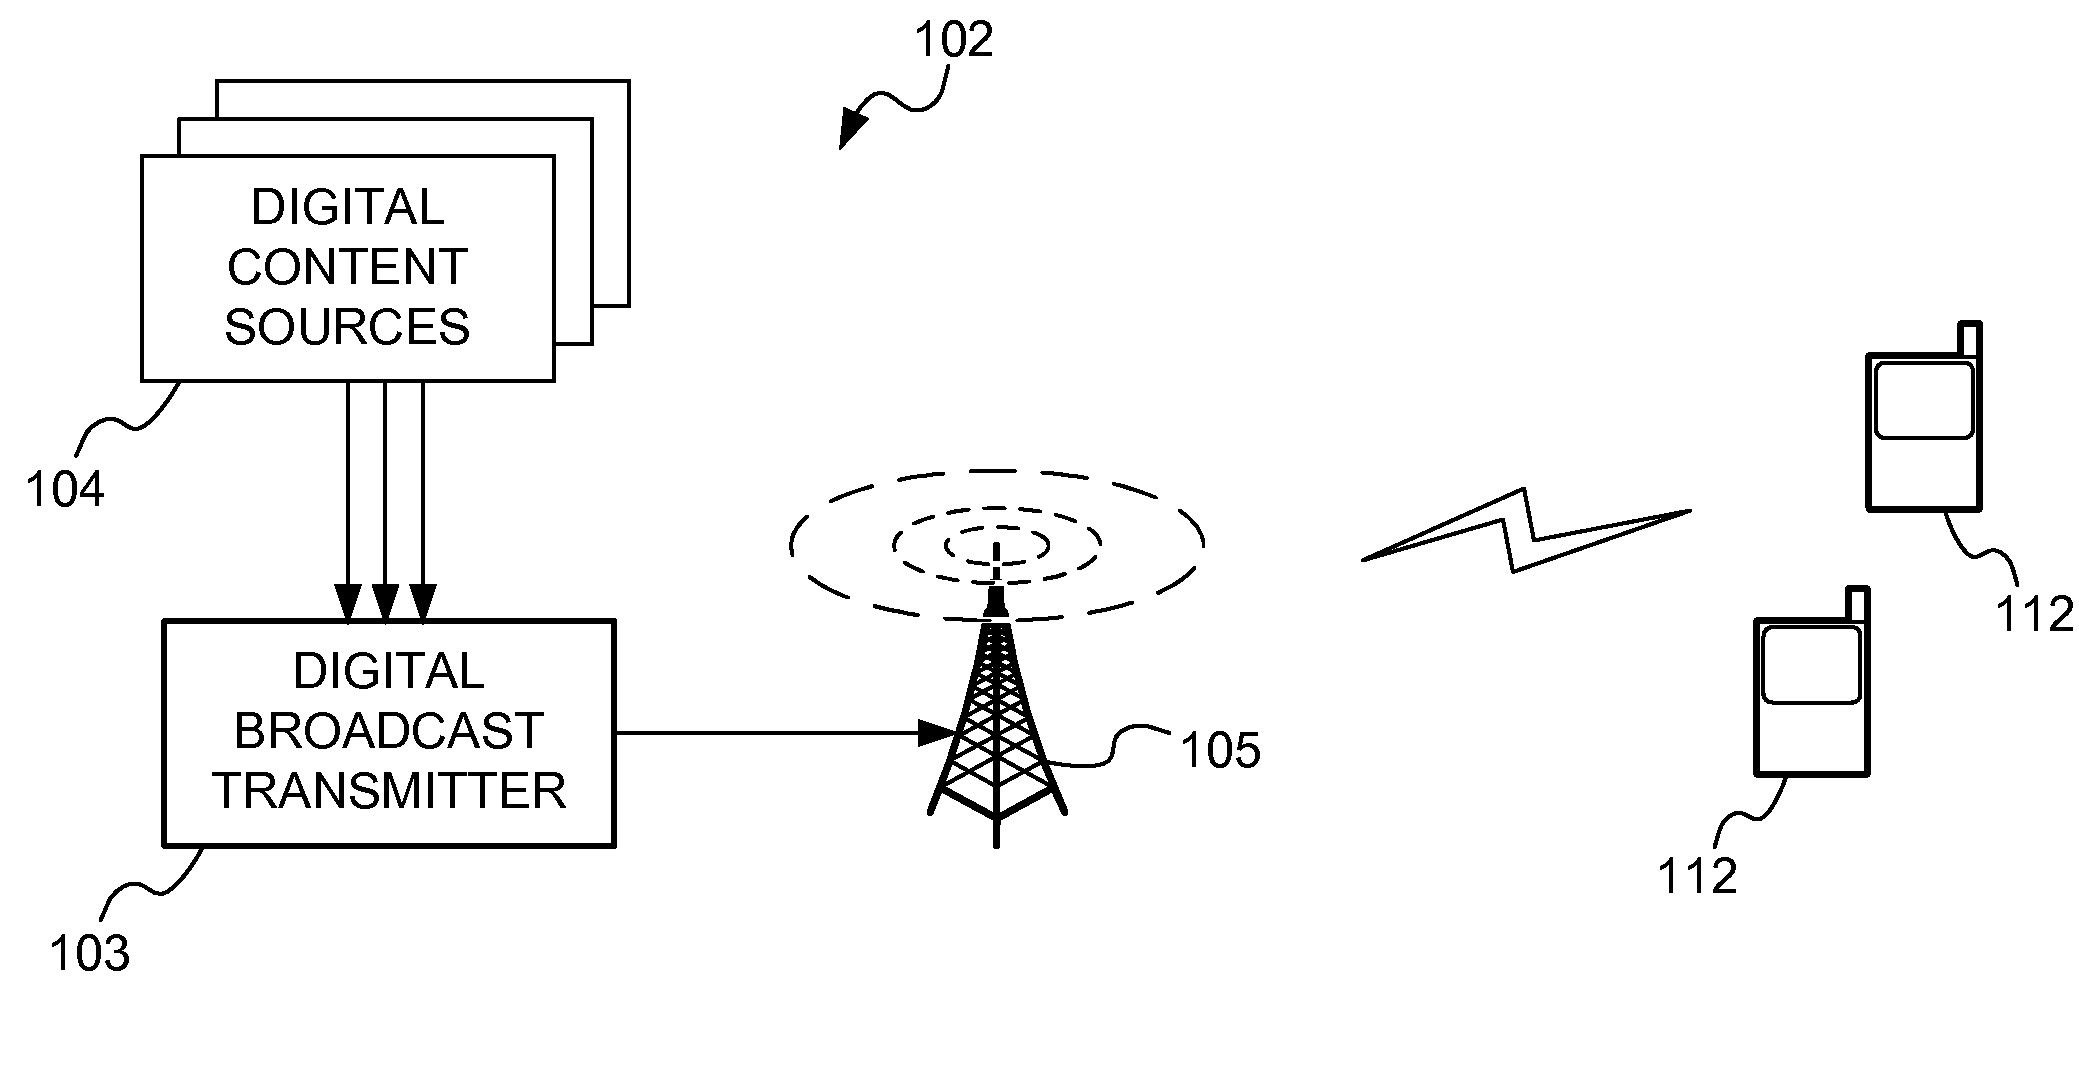 Digital broadcast receiver capacity signalling metadata